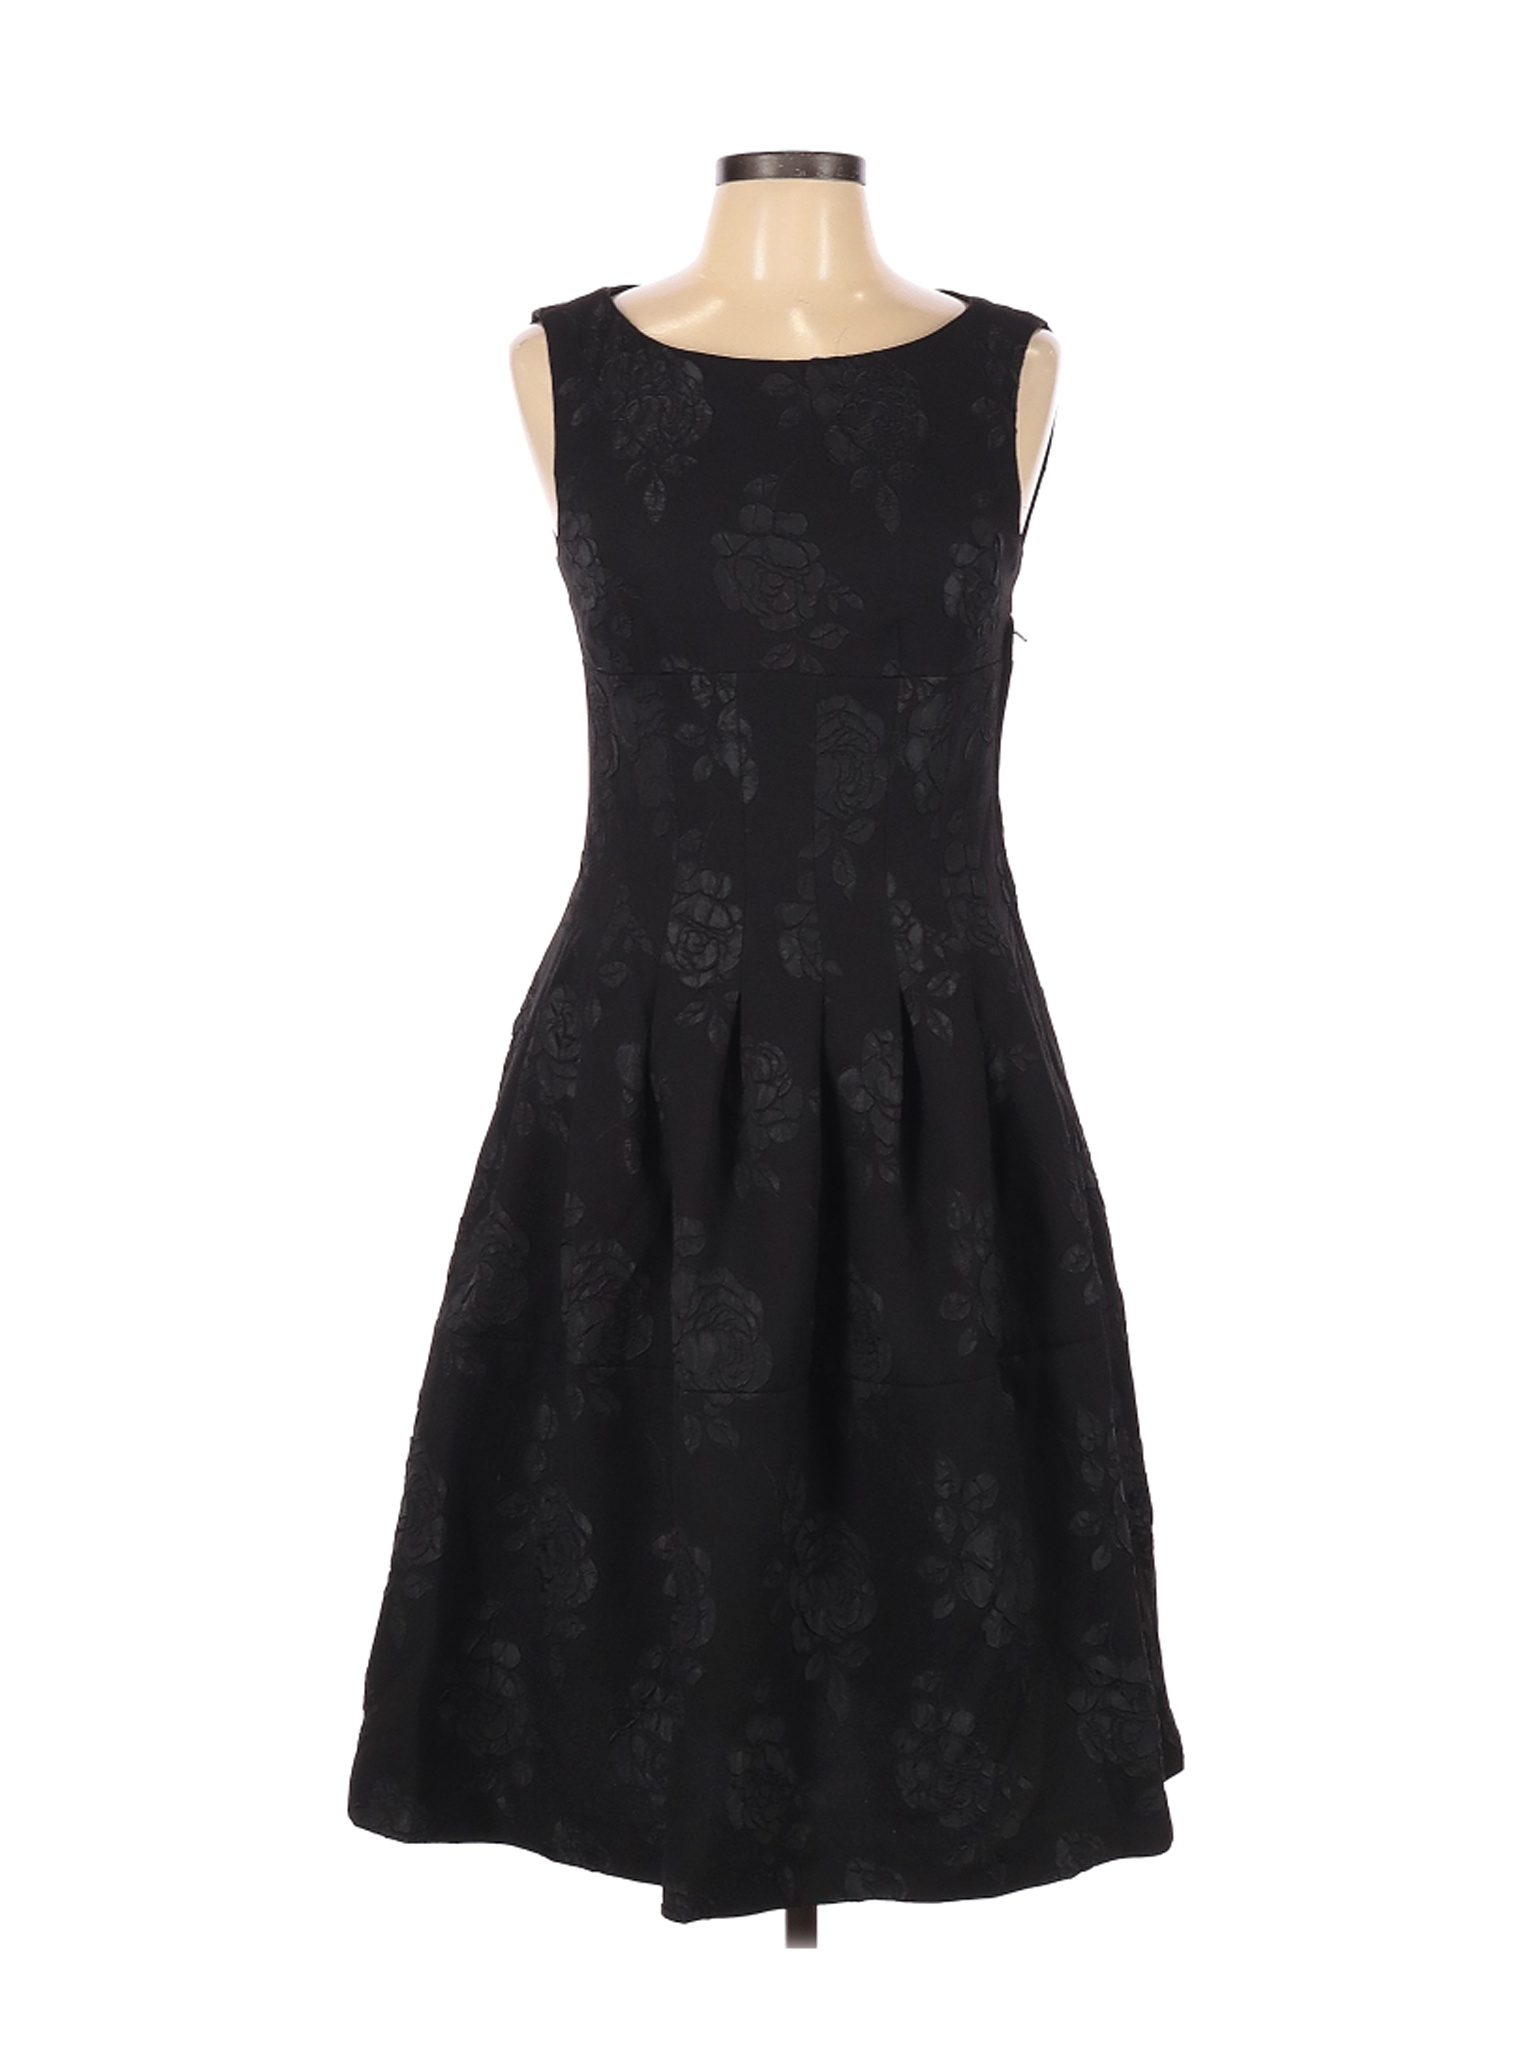 H&M Women Black Cocktail Dress 10 | eBay